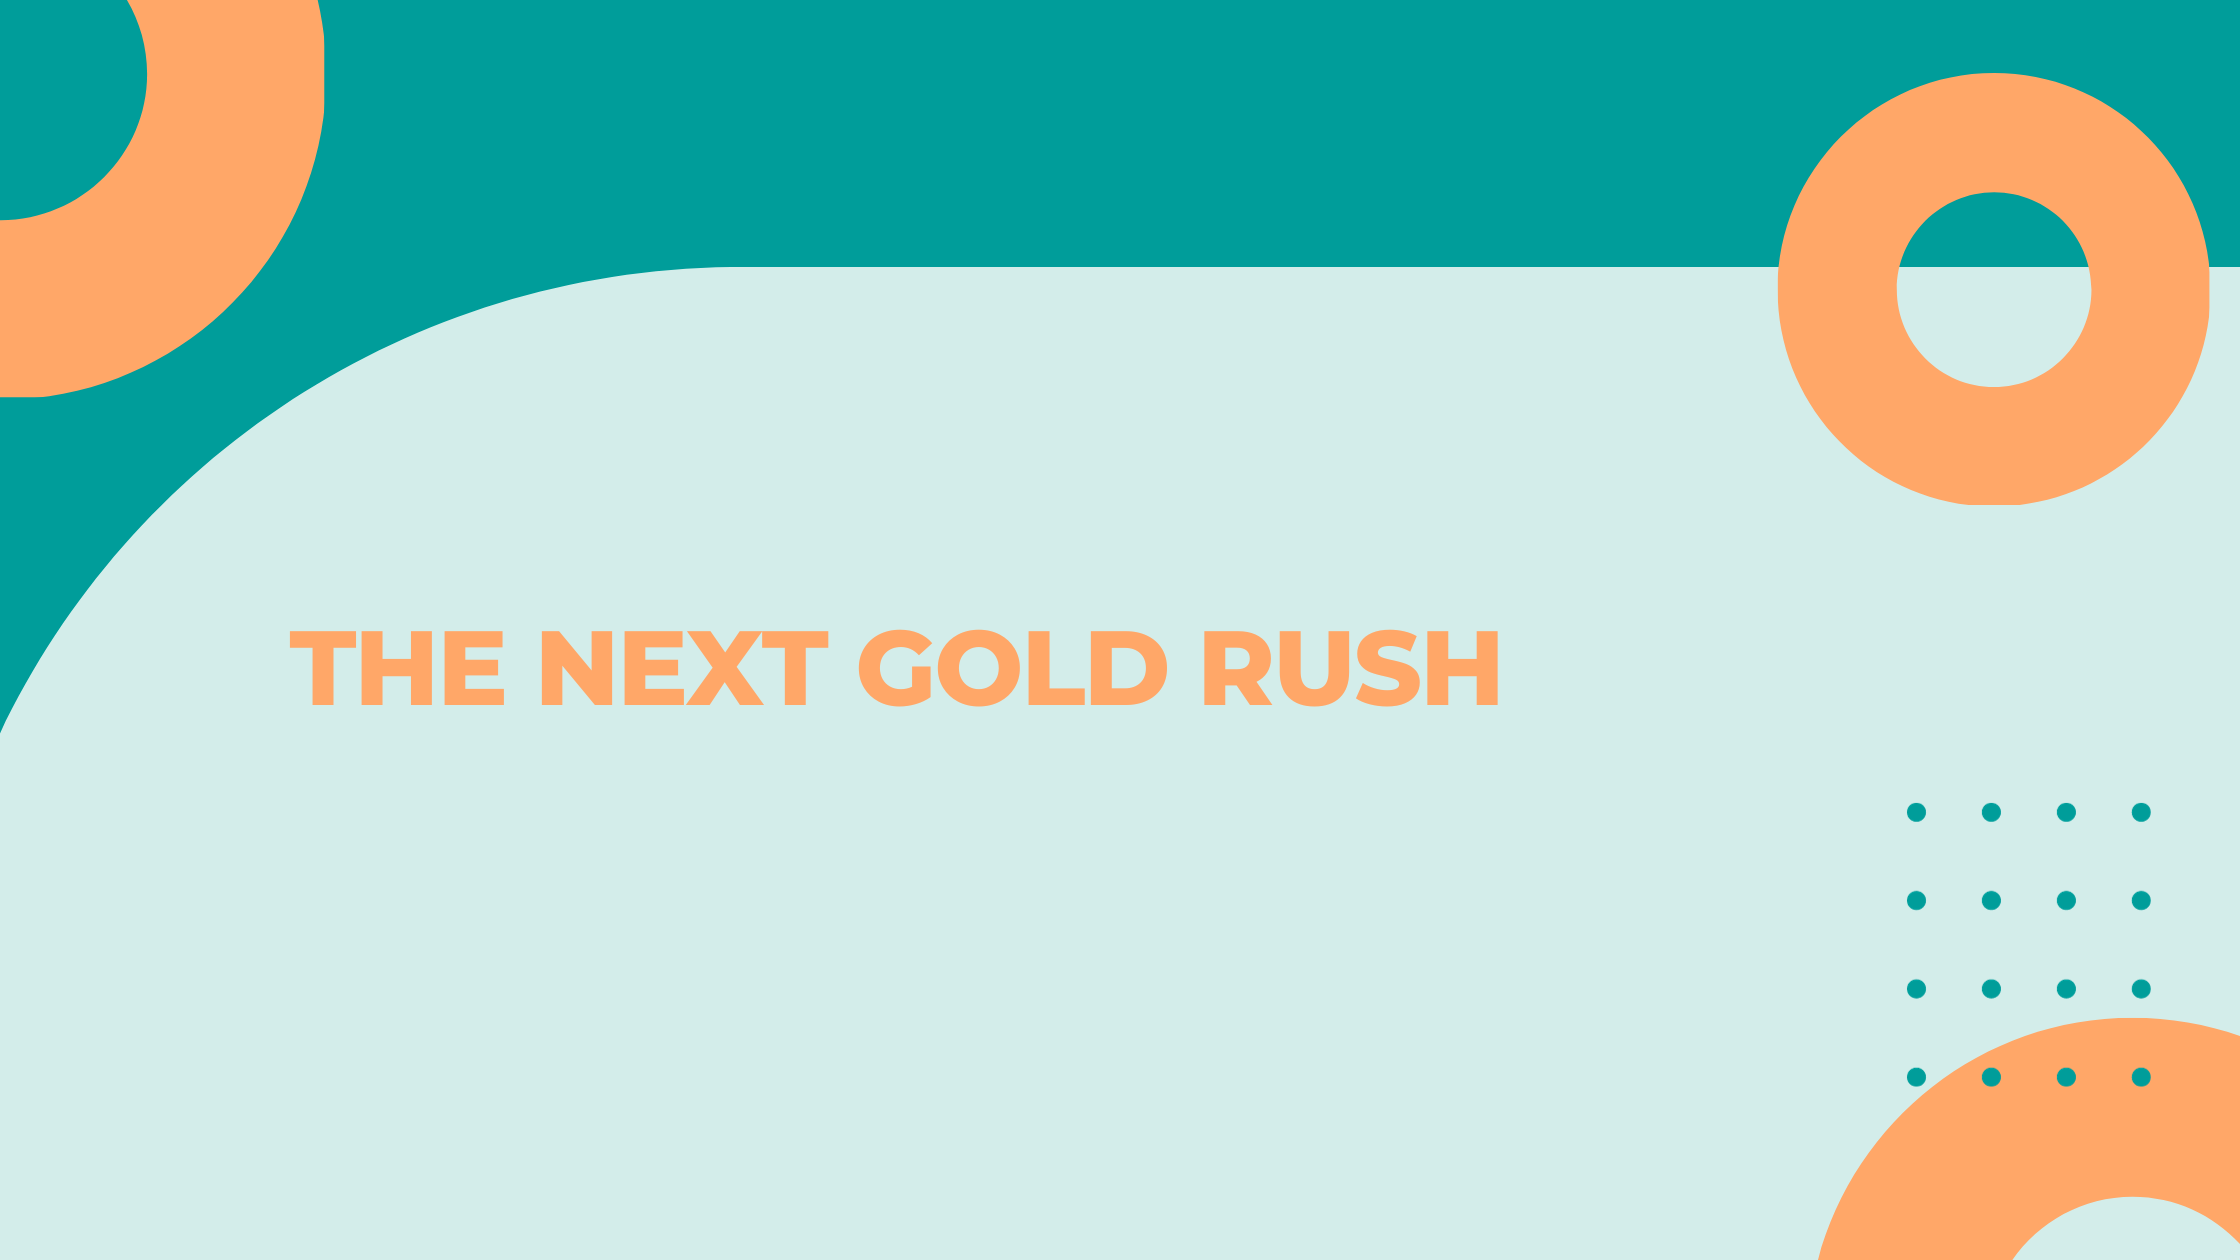 The Next Gold Rush